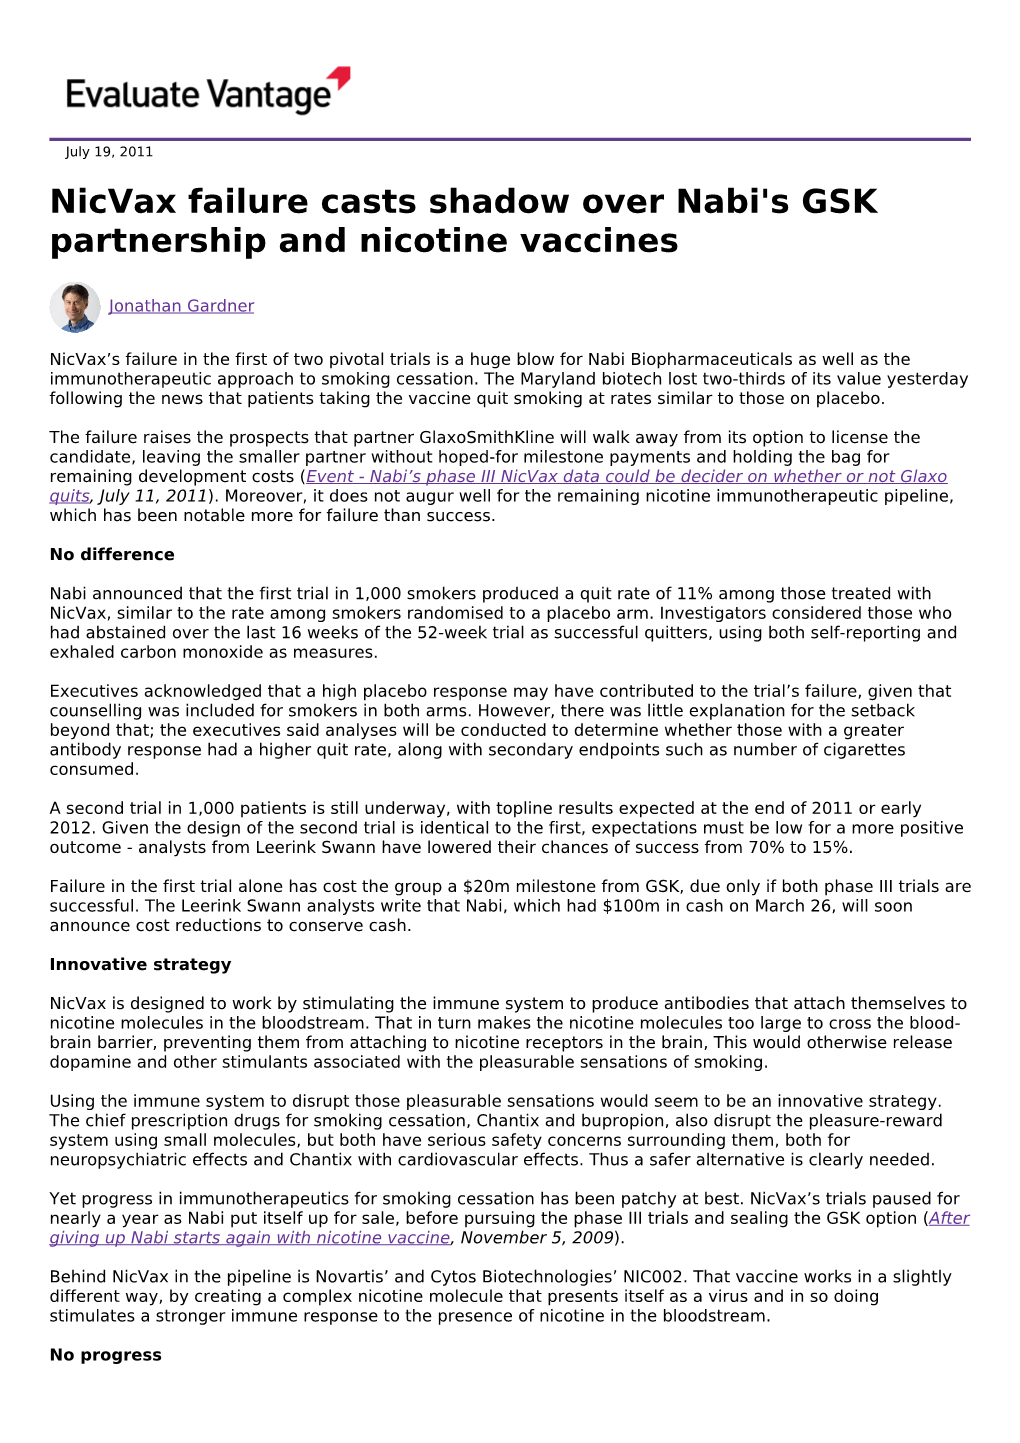 Nicvax Failure Casts Shadow Over Nabi's GSK Partnership and Nicotine Vaccines